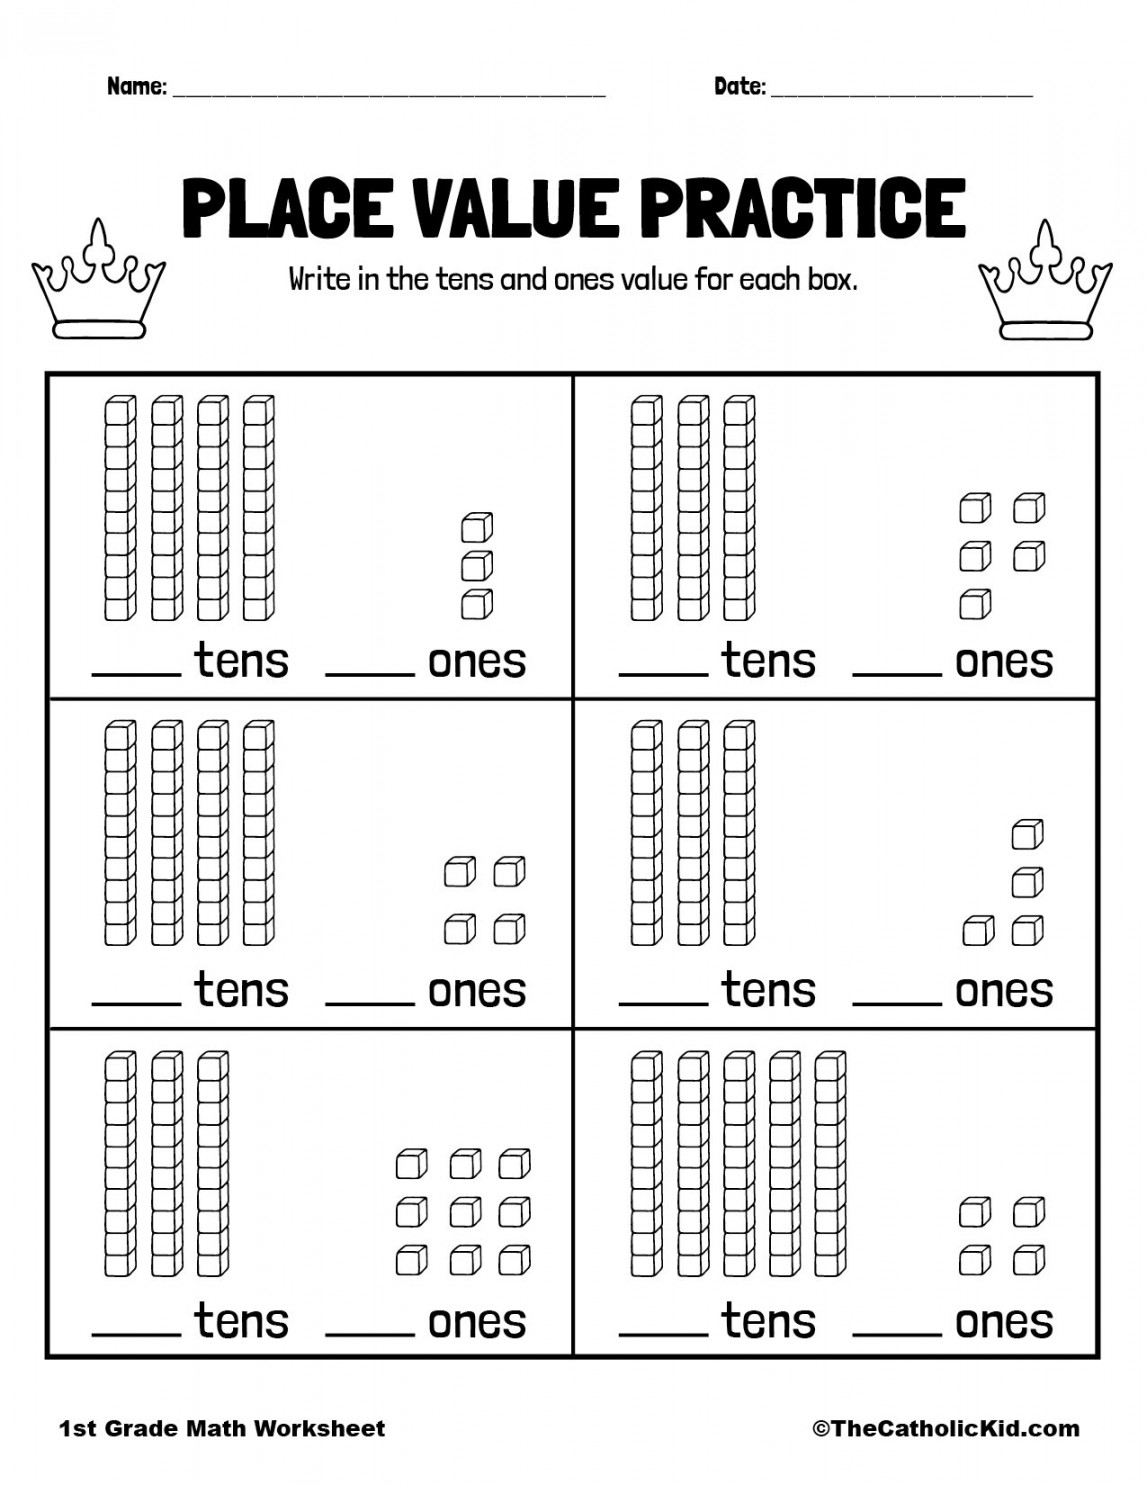 Place Value Worksheet st Grade Math - TheCatholicKid